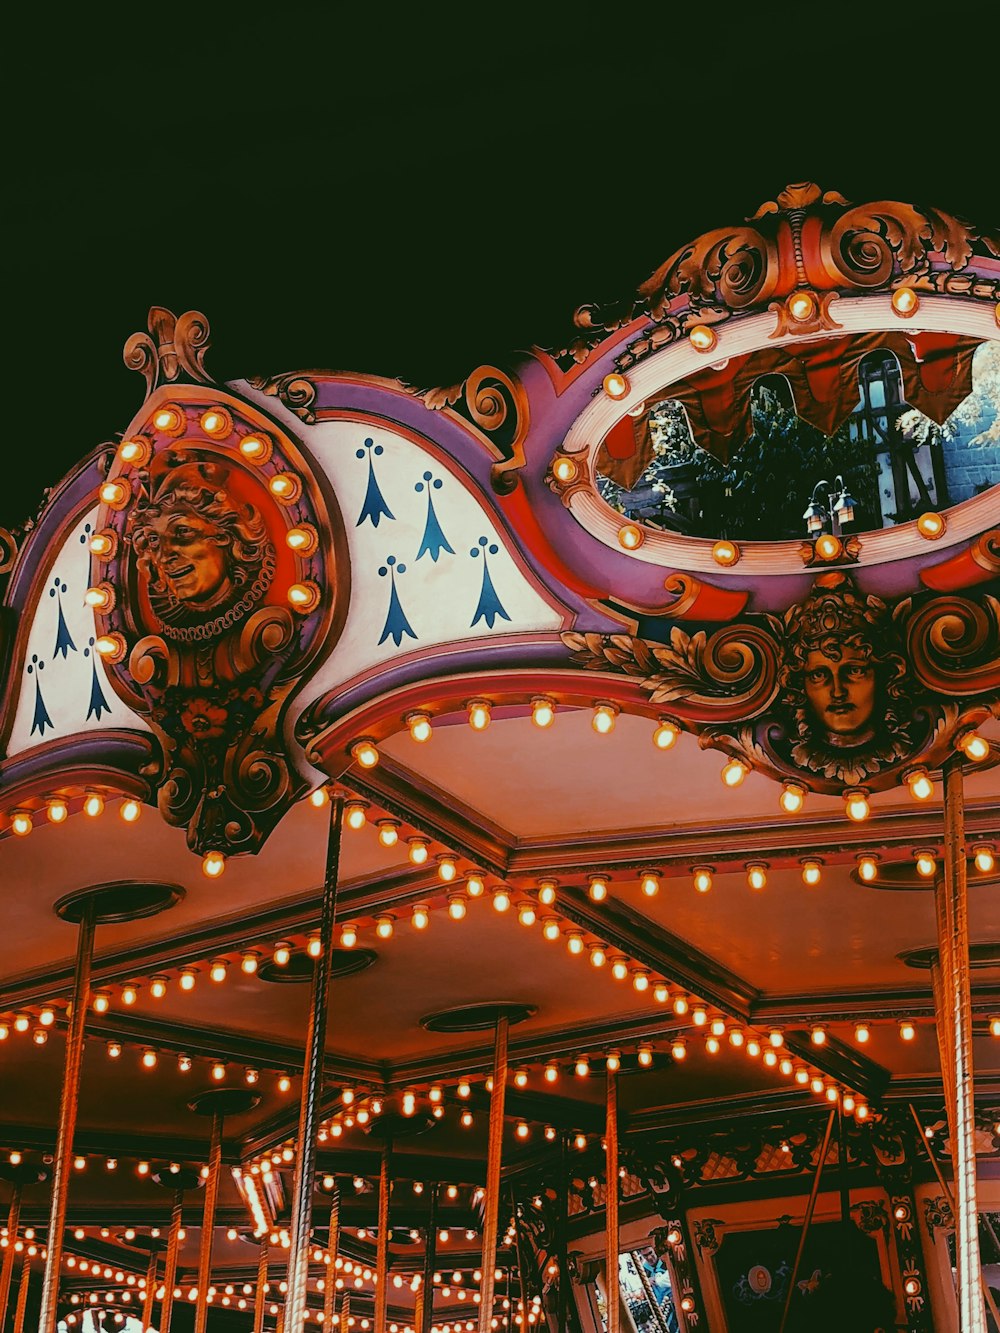 multicolored carousel amusement park ride